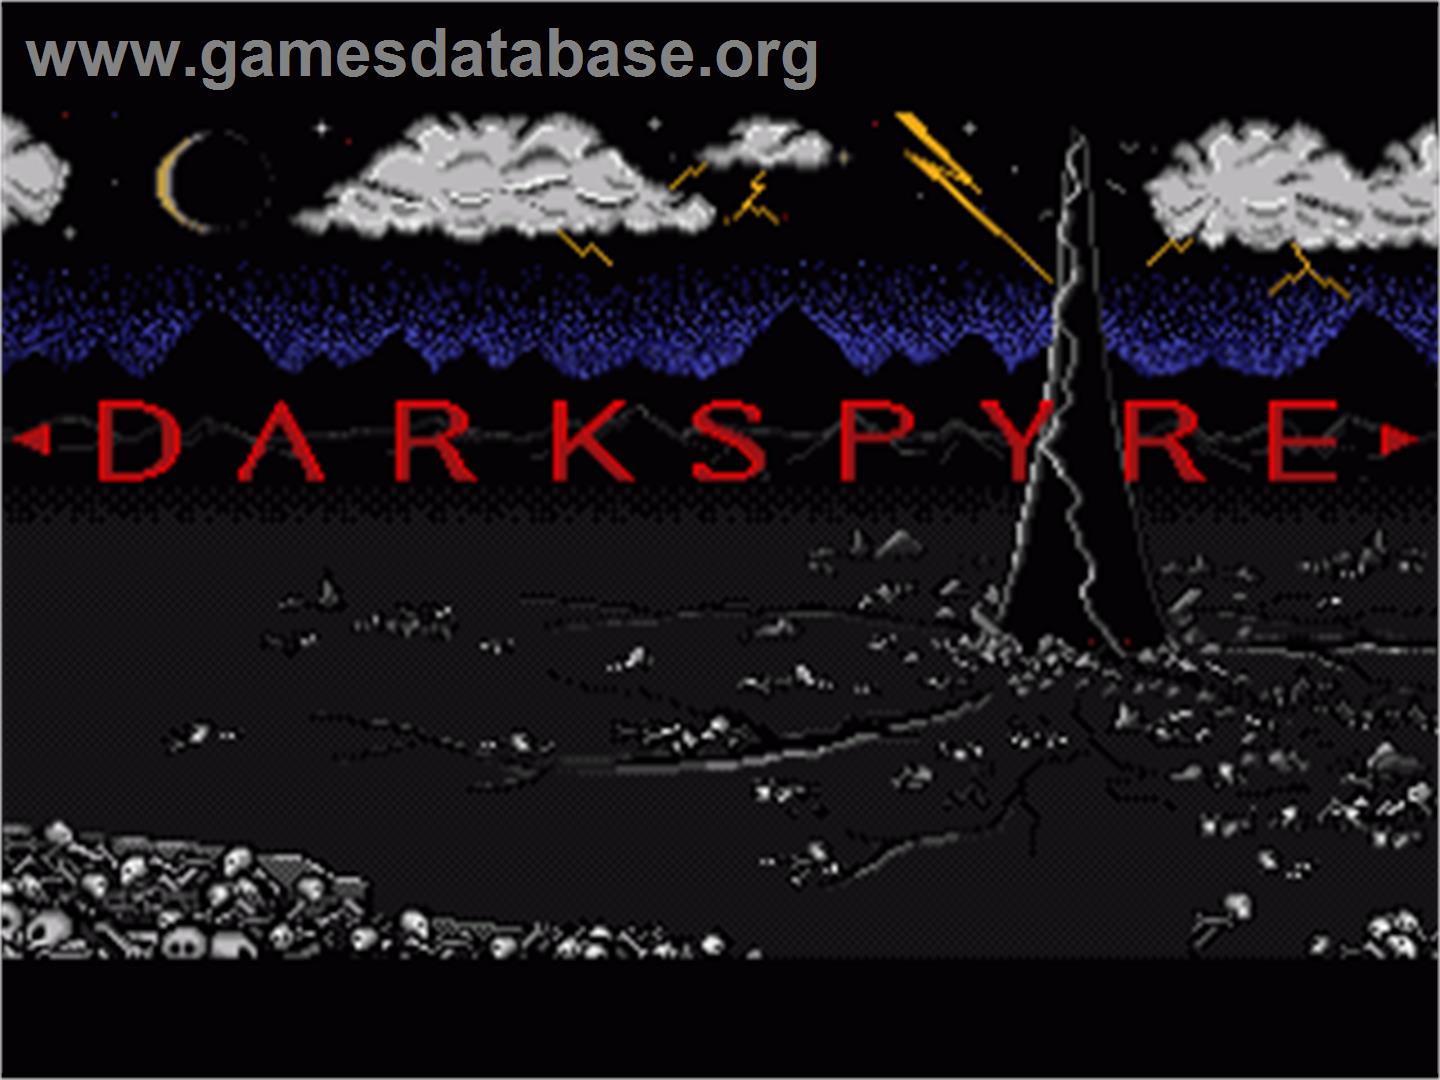 DarkSpyre - Commodore Amiga - Artwork - In Game